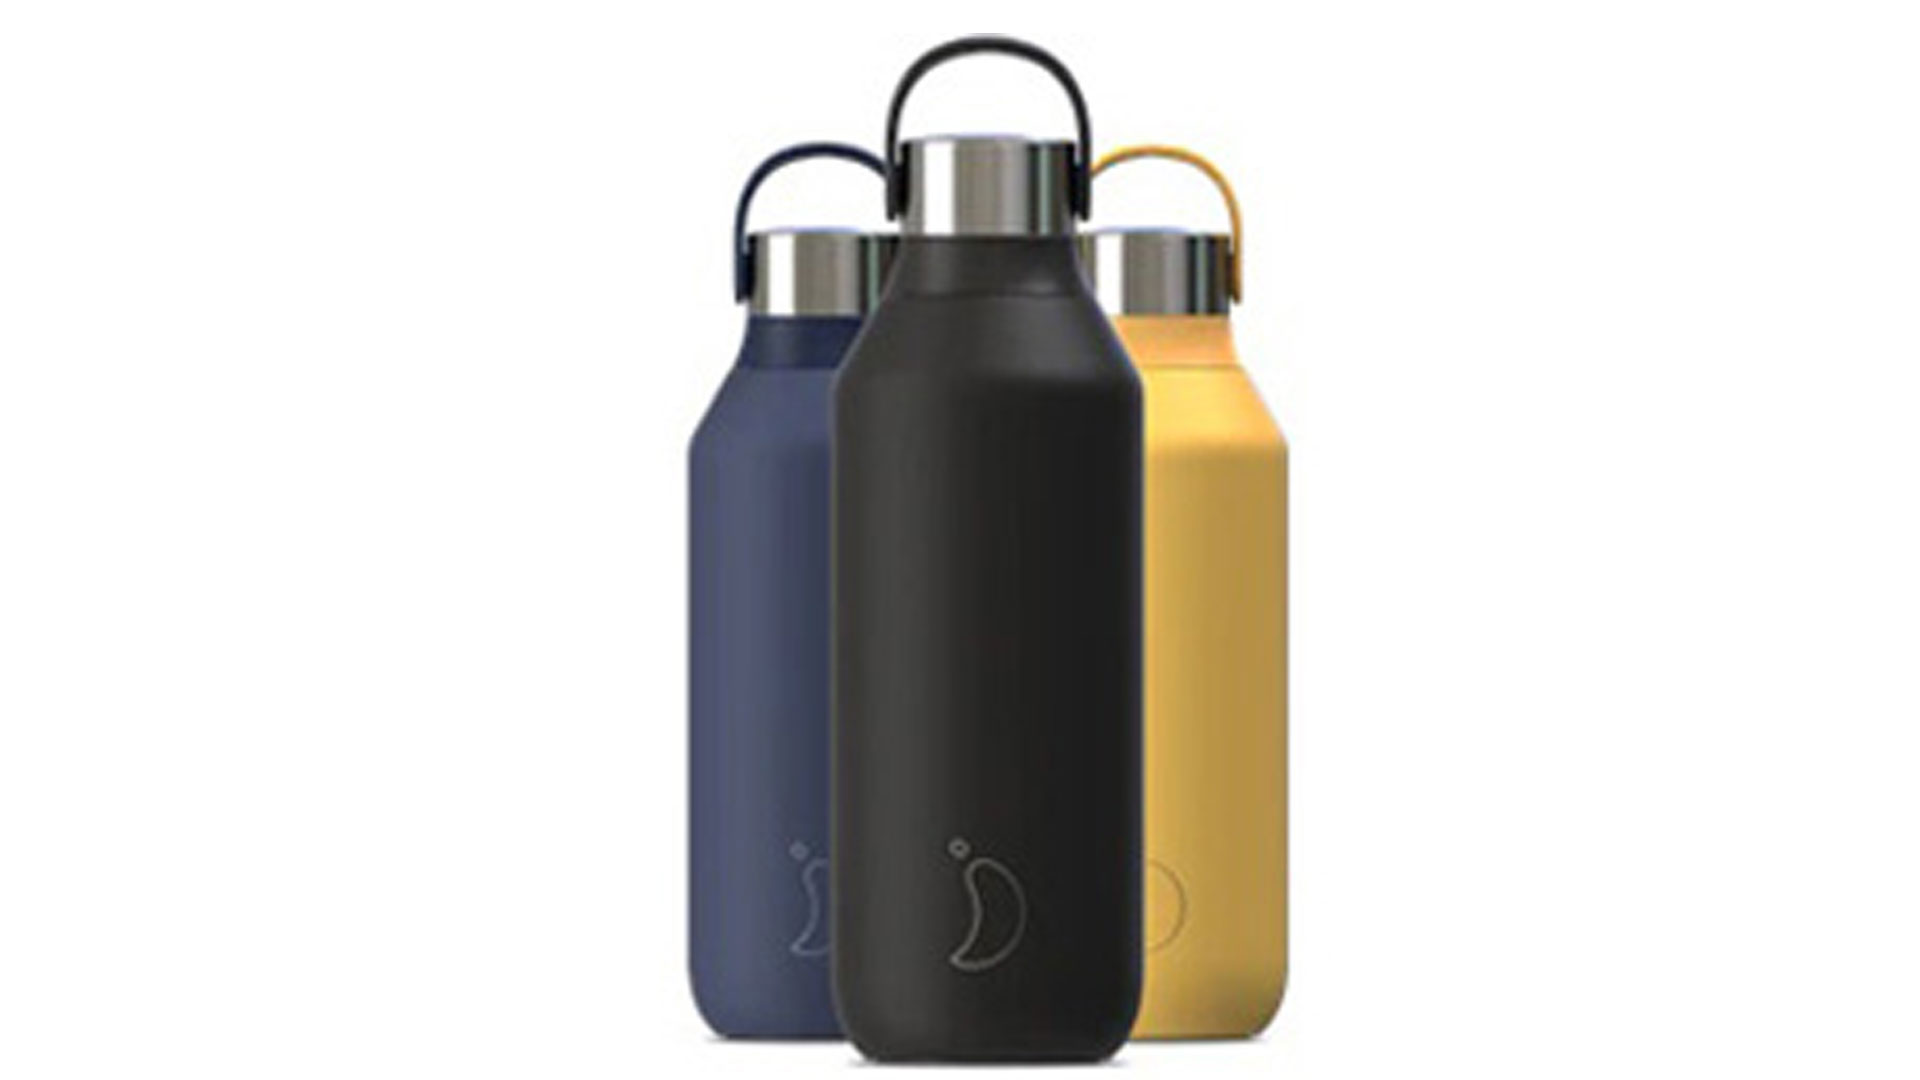 Chilly's Mono All Black Water Bottle 750ml – Kooks Unlimited